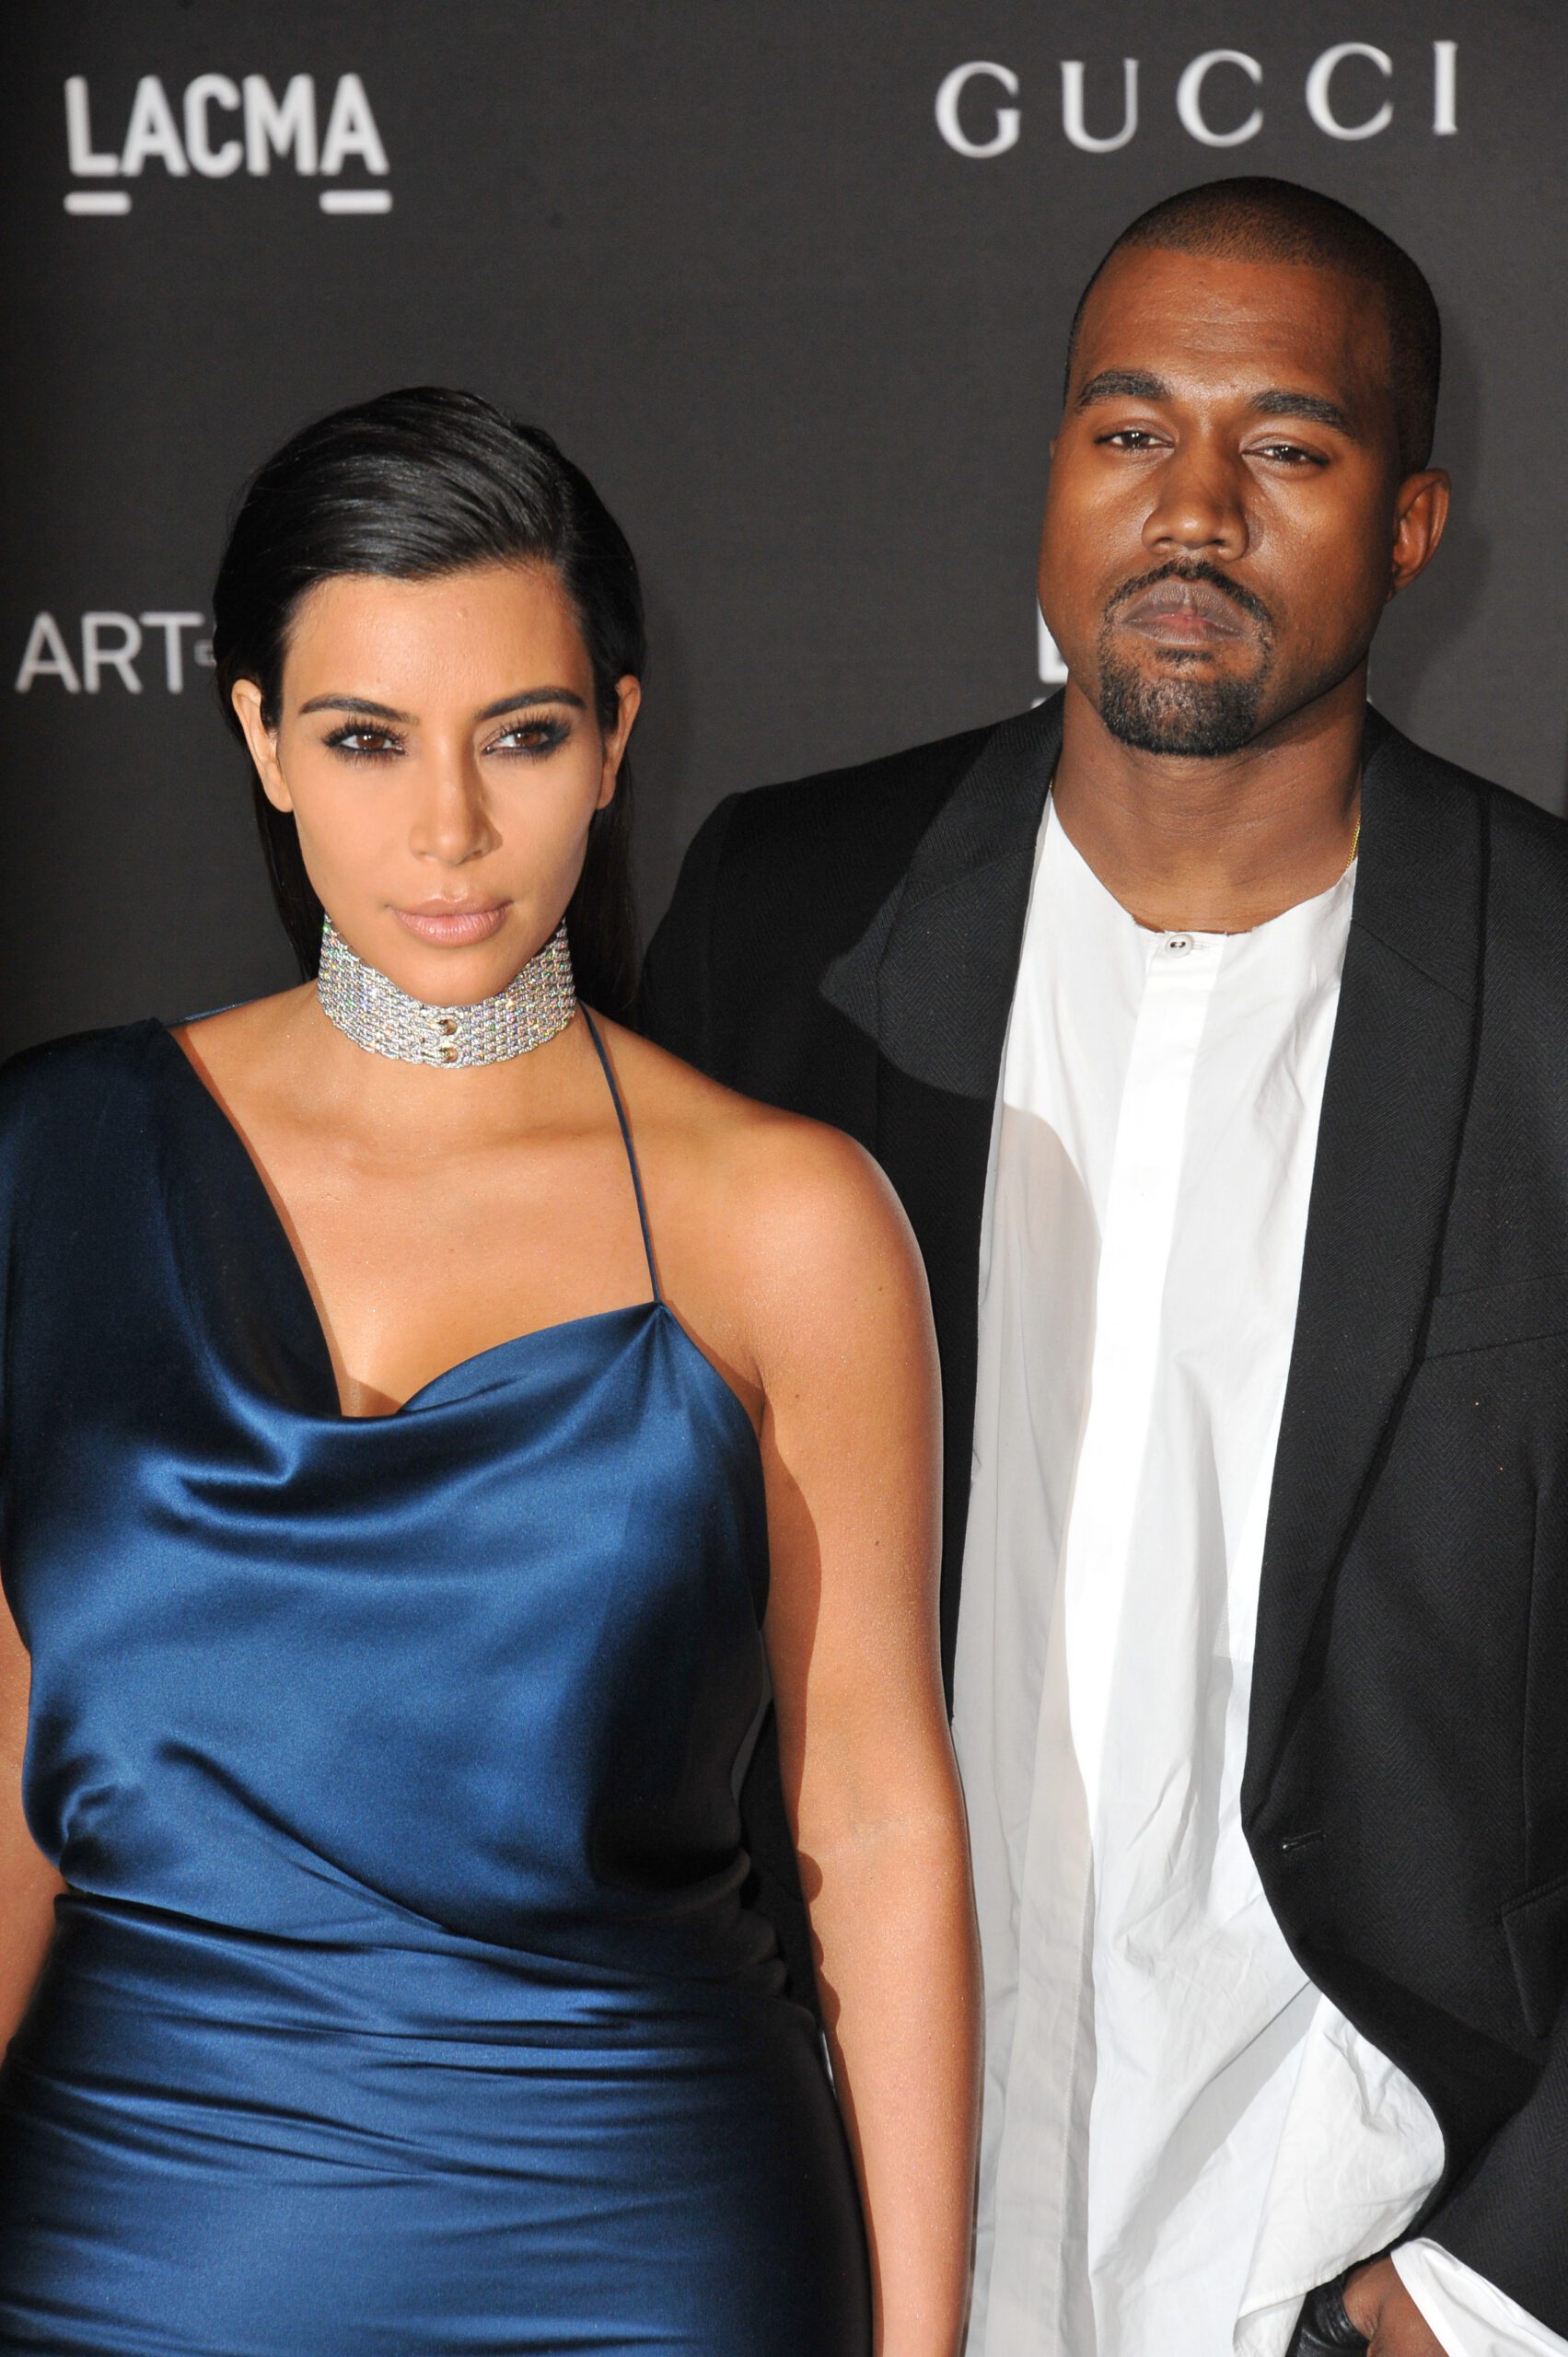 Kanye 'Ye' West: Τα απίστευτα λόγια για την Kim Kardashian και τη σχέση της με τον Pete Davidson που άφησαν άφωνο το κοινό